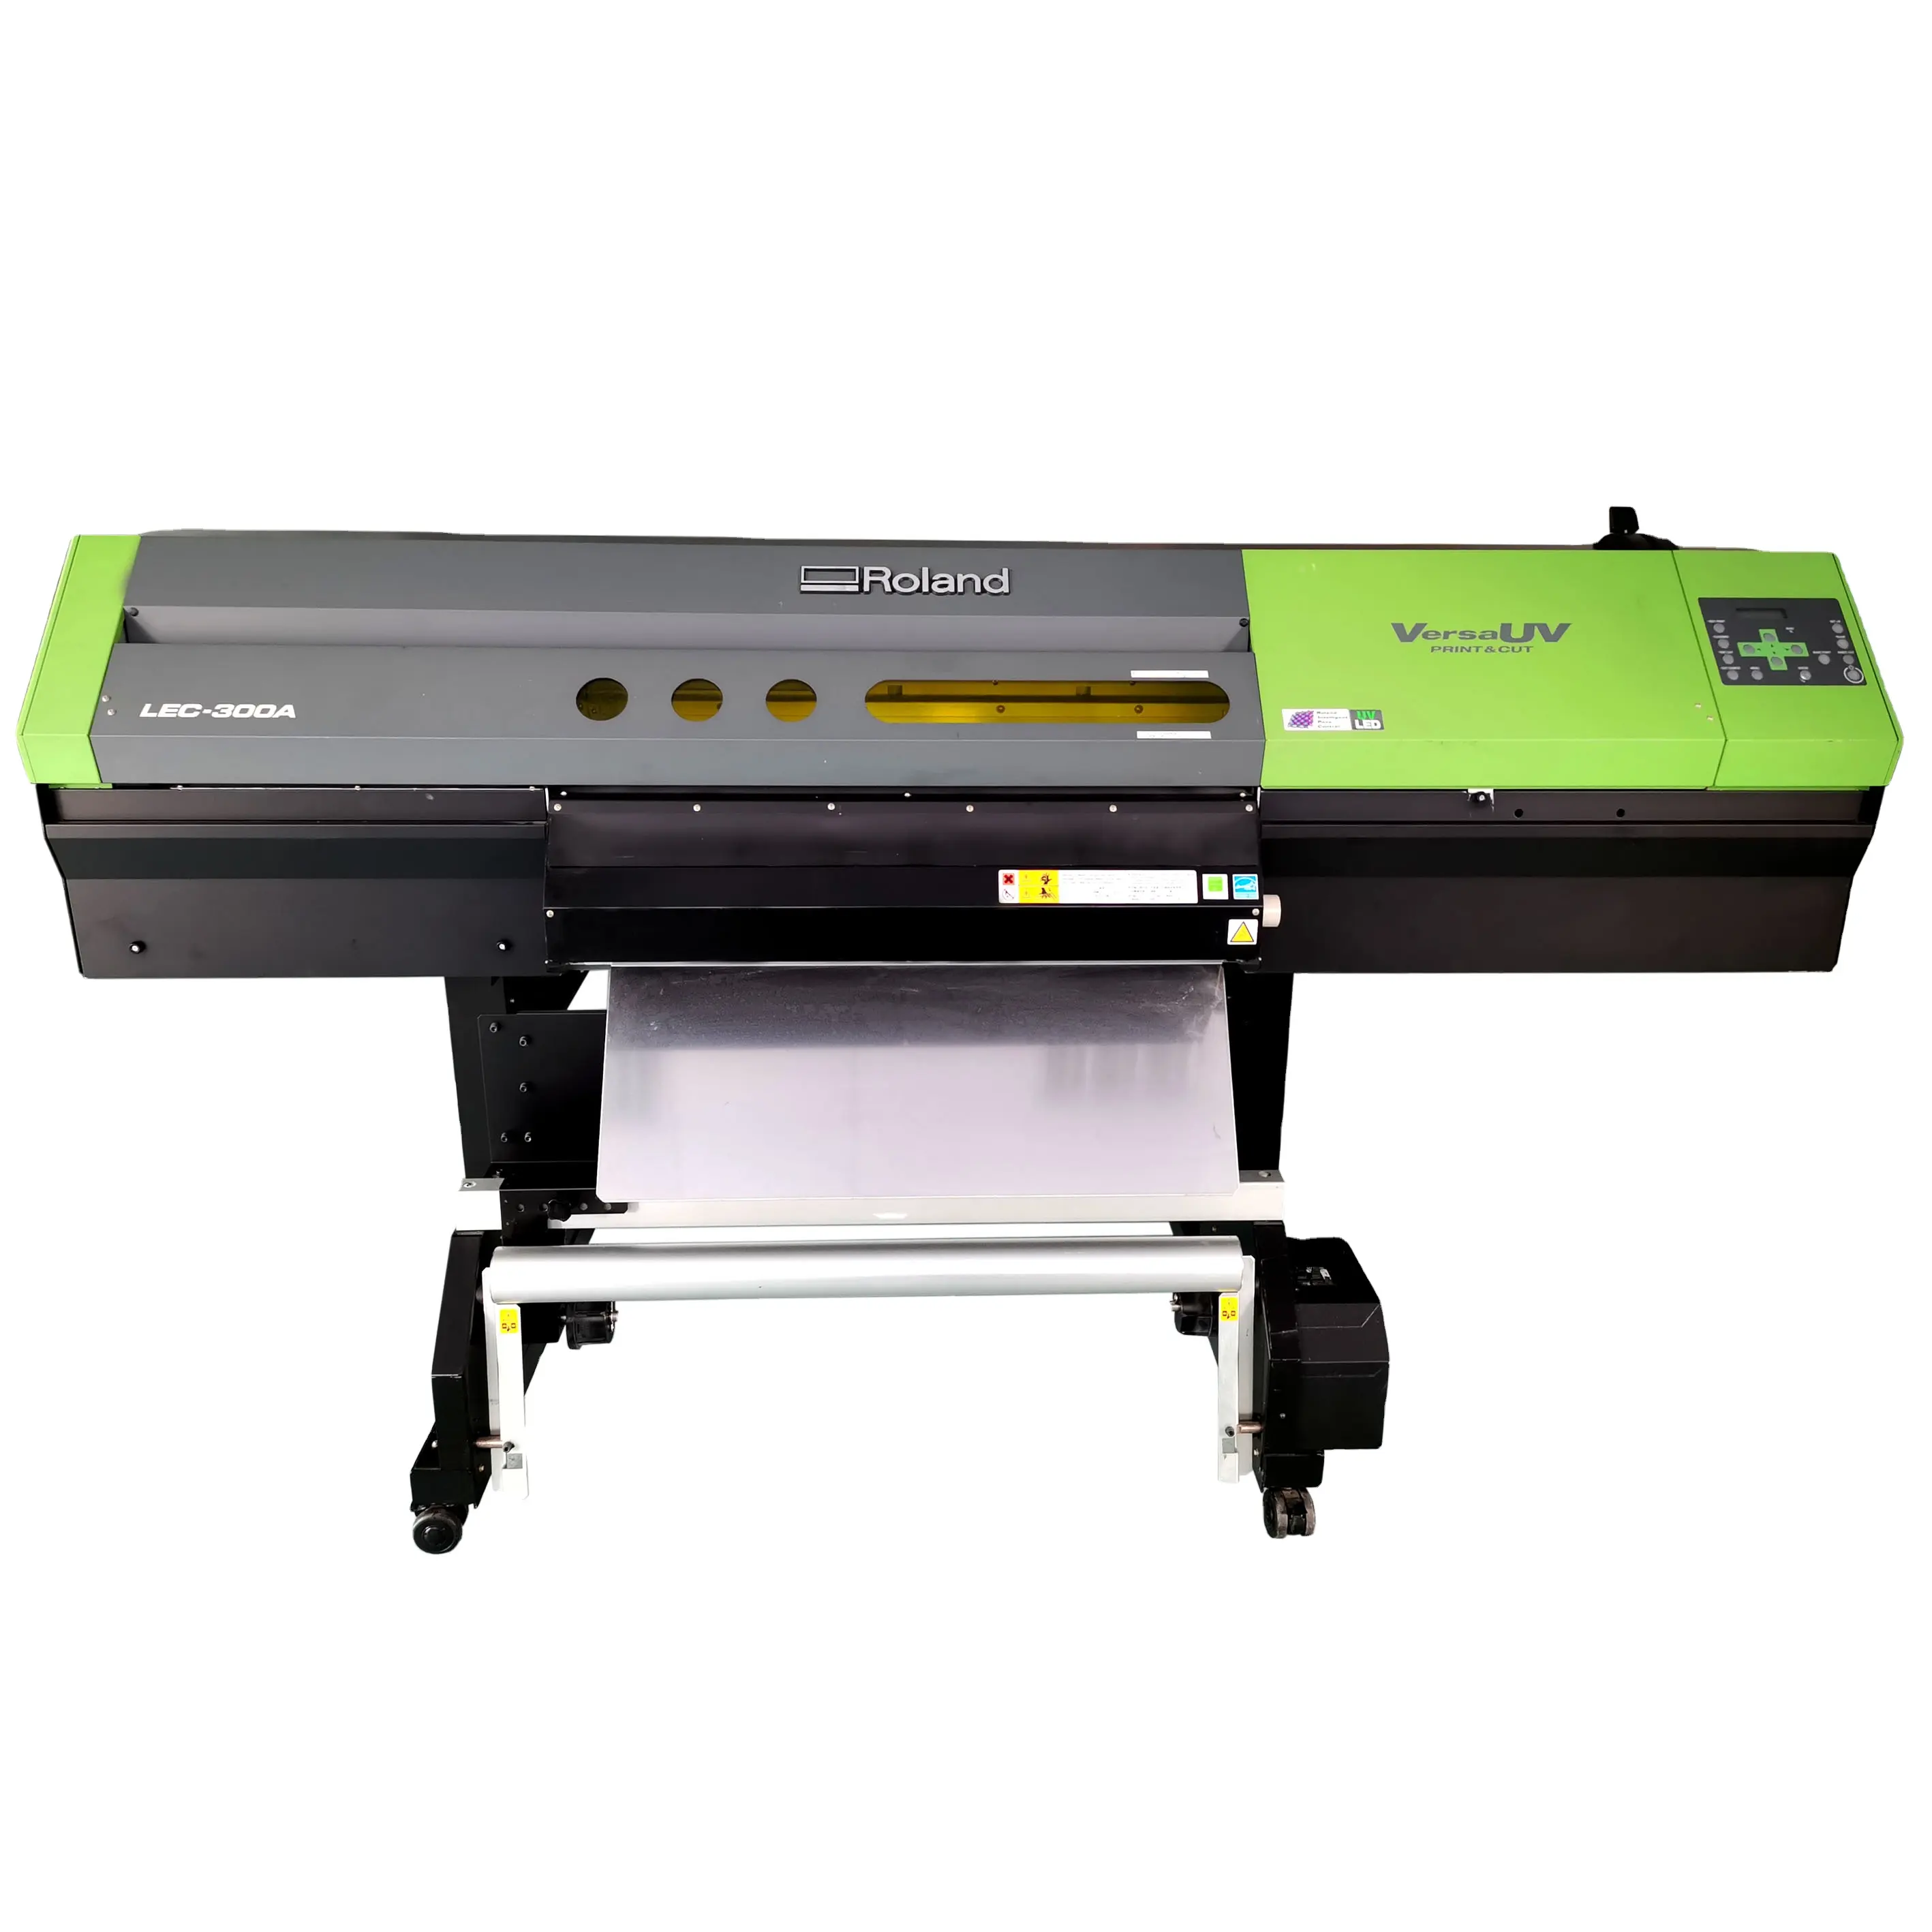 used roland uv led printer LEC300/LEC300A print and cut versa uv plottre can use banner label printing